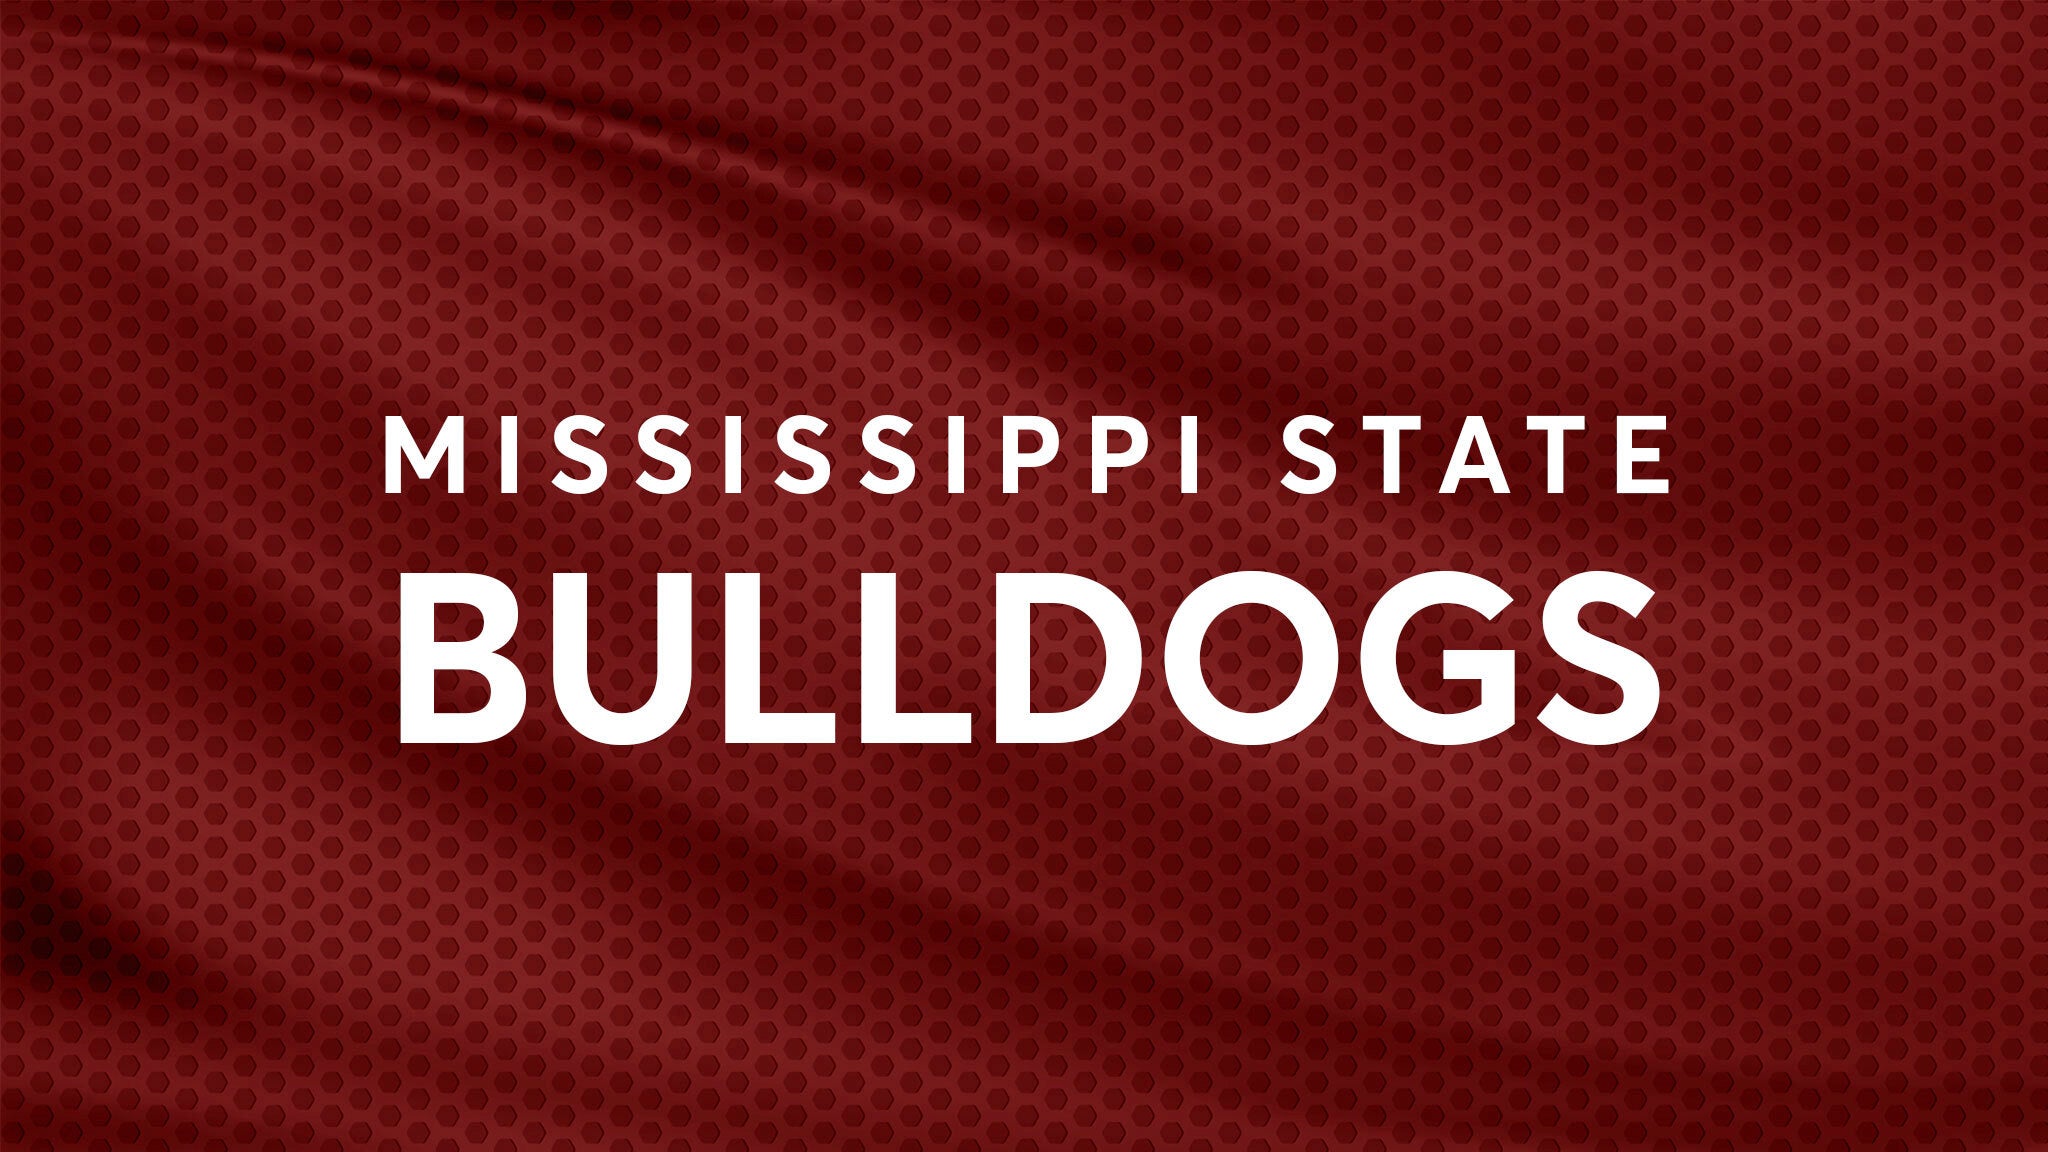 Mississippi State Bulldogs Football vs. Missouri Tigers Football hero